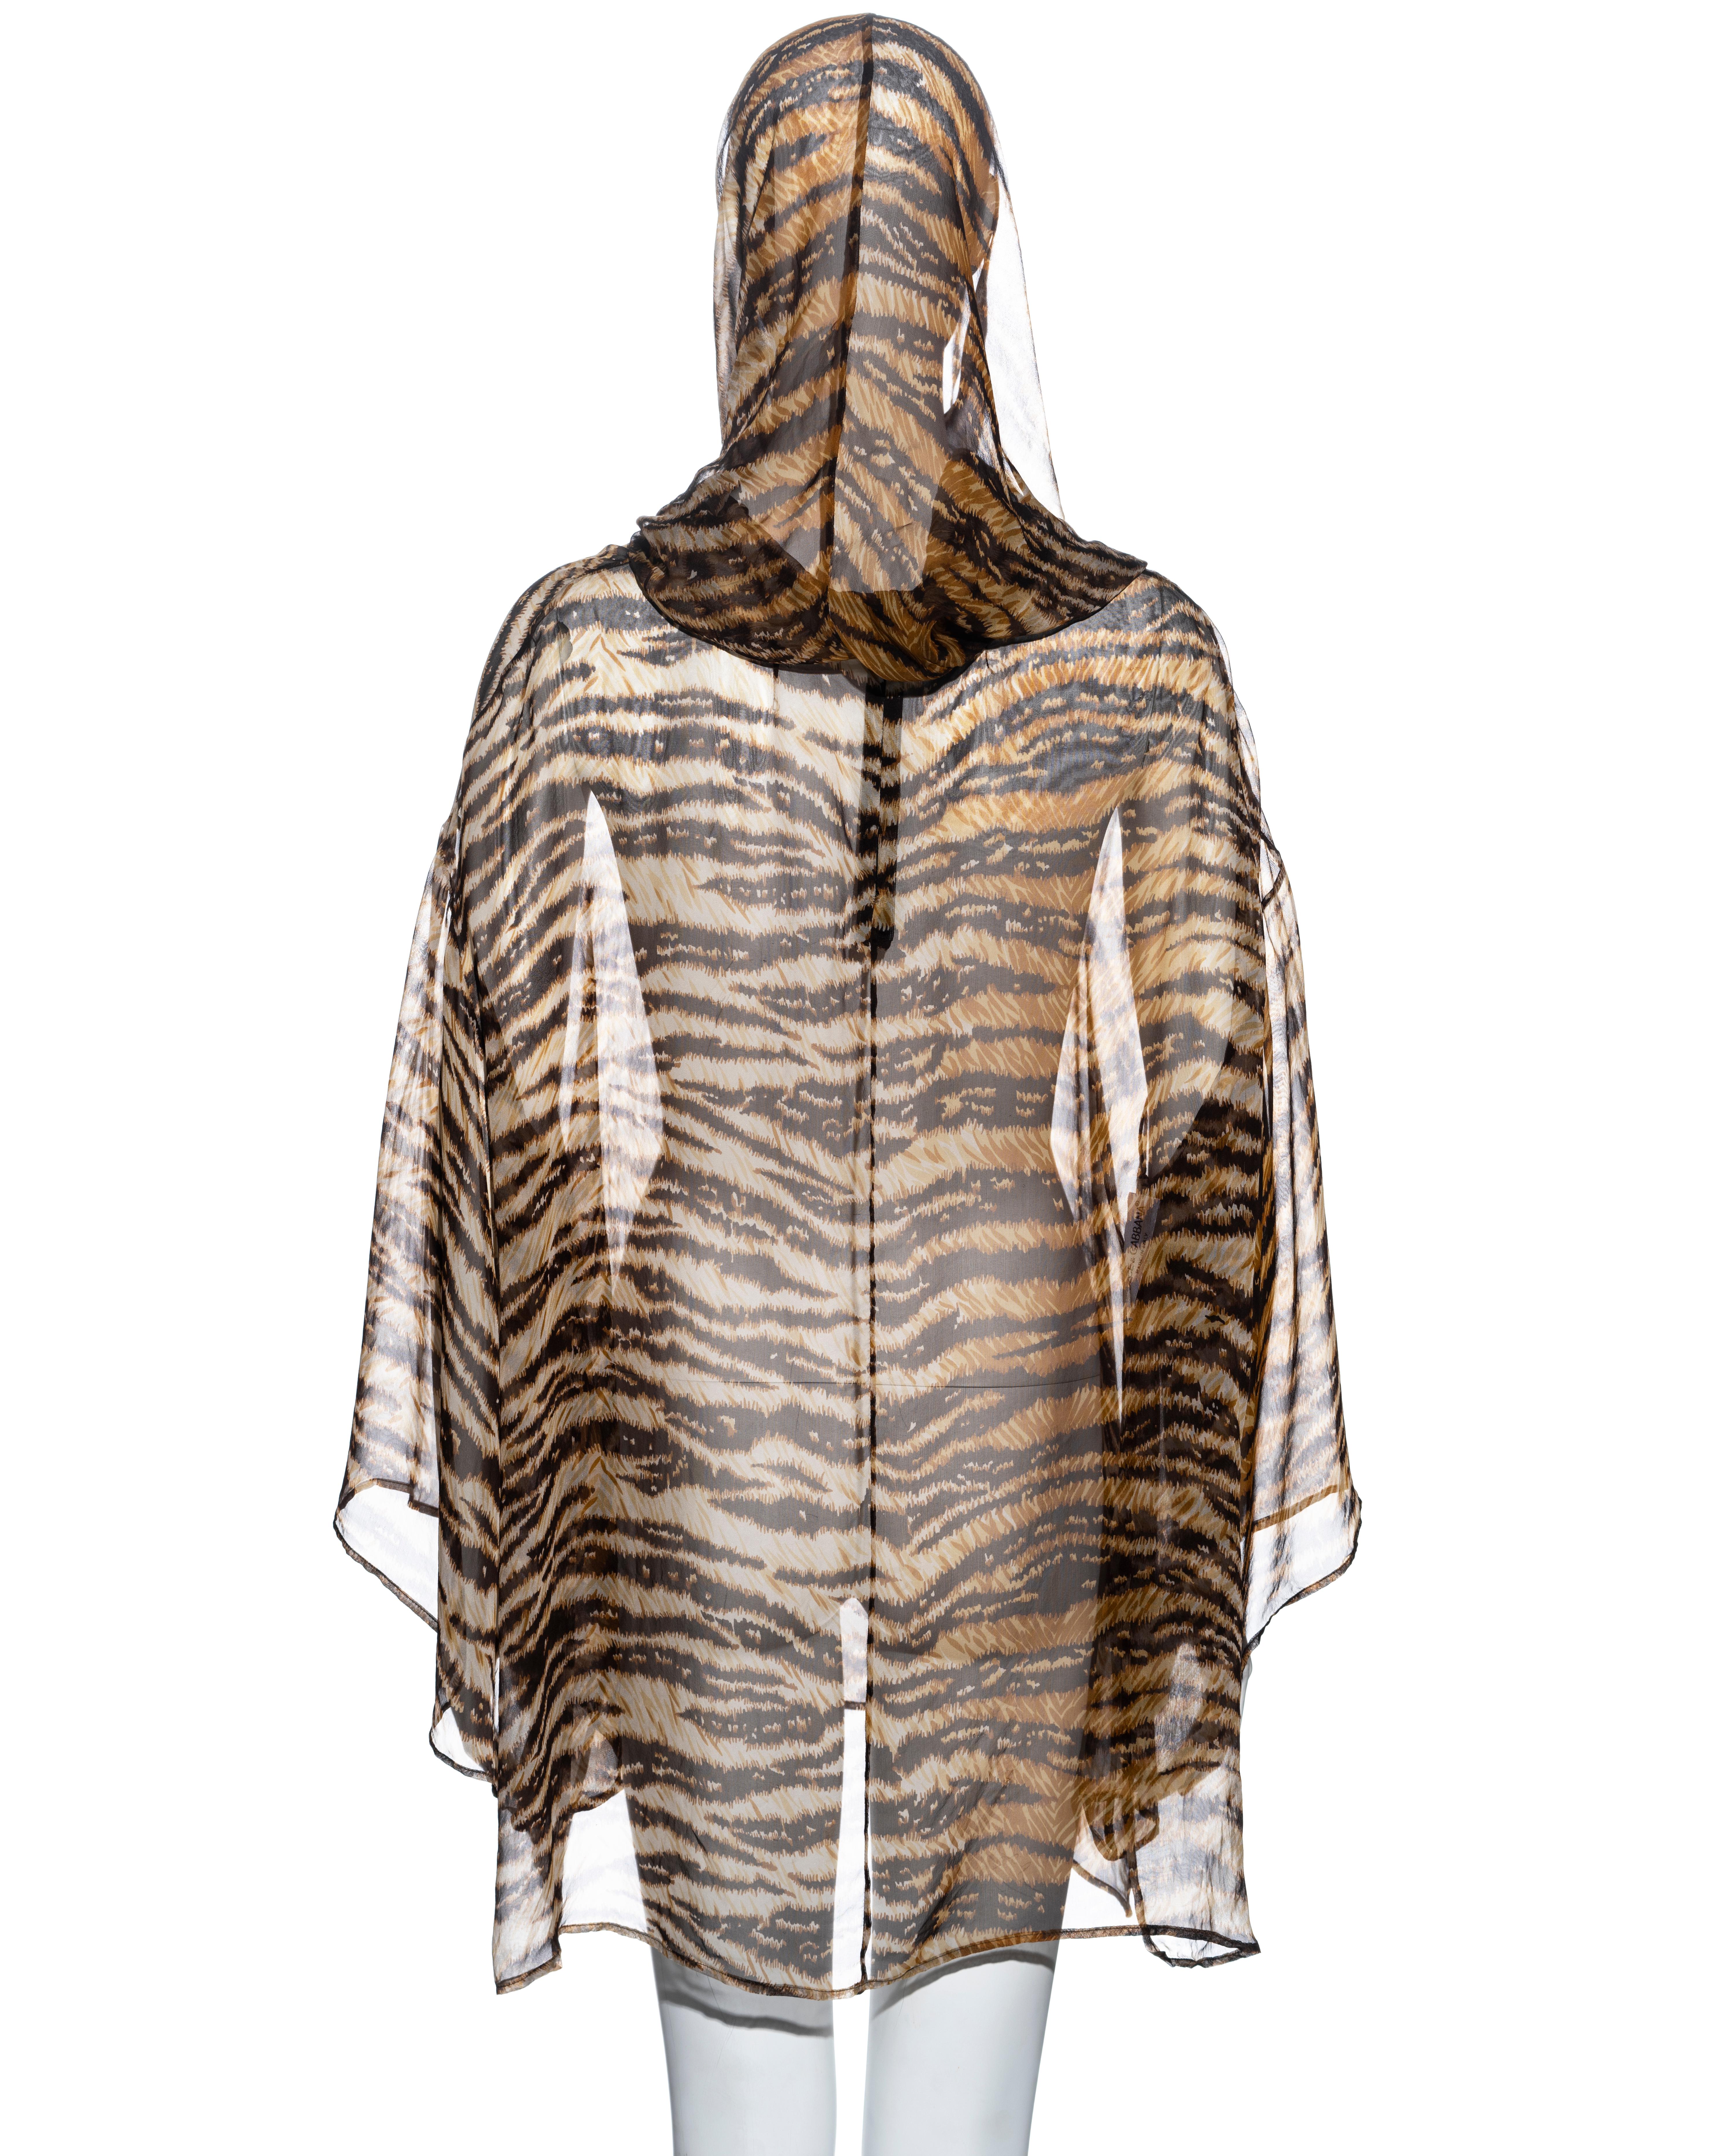 Dolce & Gabbana tiger print silk chiffon hooded tunic dress, ss 1996 3